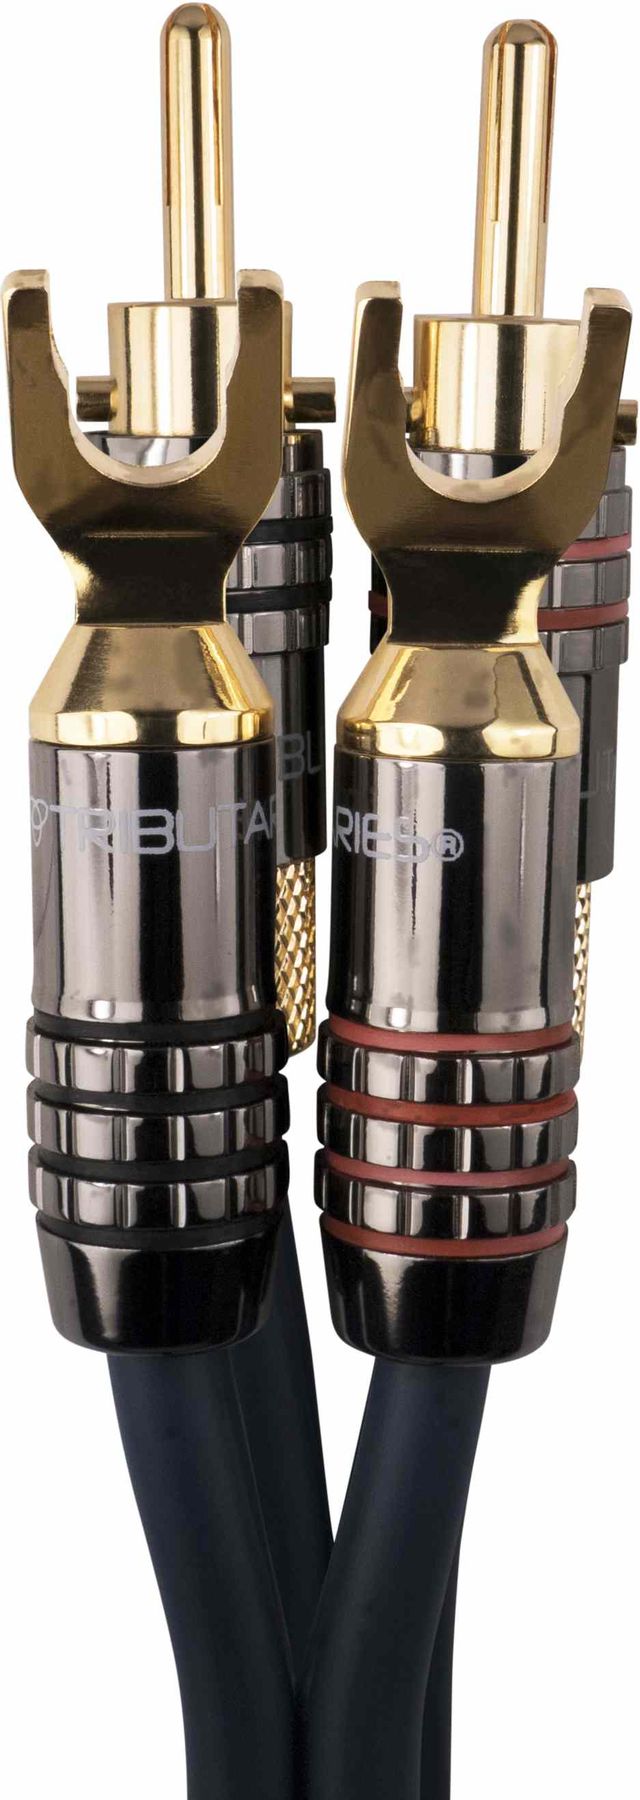 Tributaries® Serires 8 8 Ft. Banana Plugs/Spade Lugs Speaker Cable 0